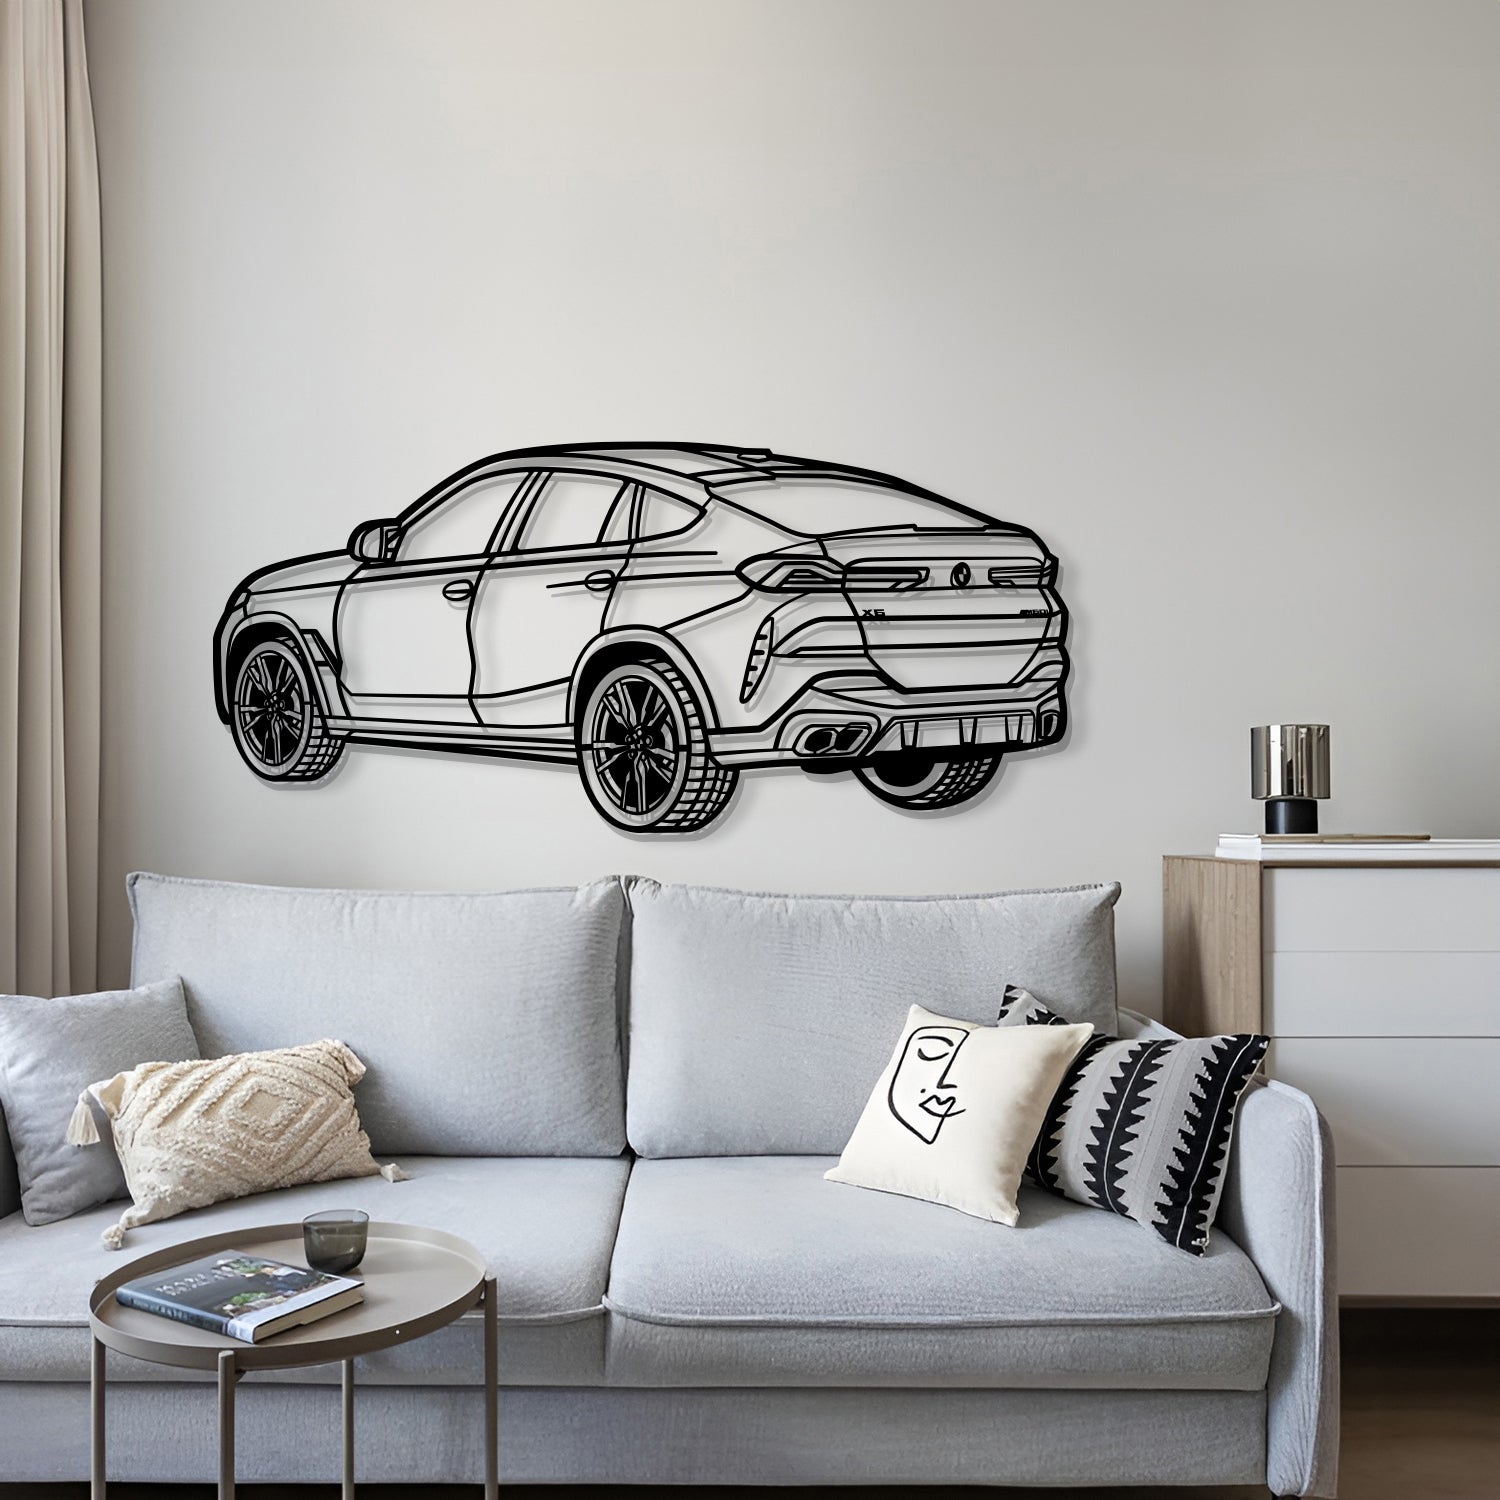 X6 PERSPECTIVE METAL CAR WALL ART